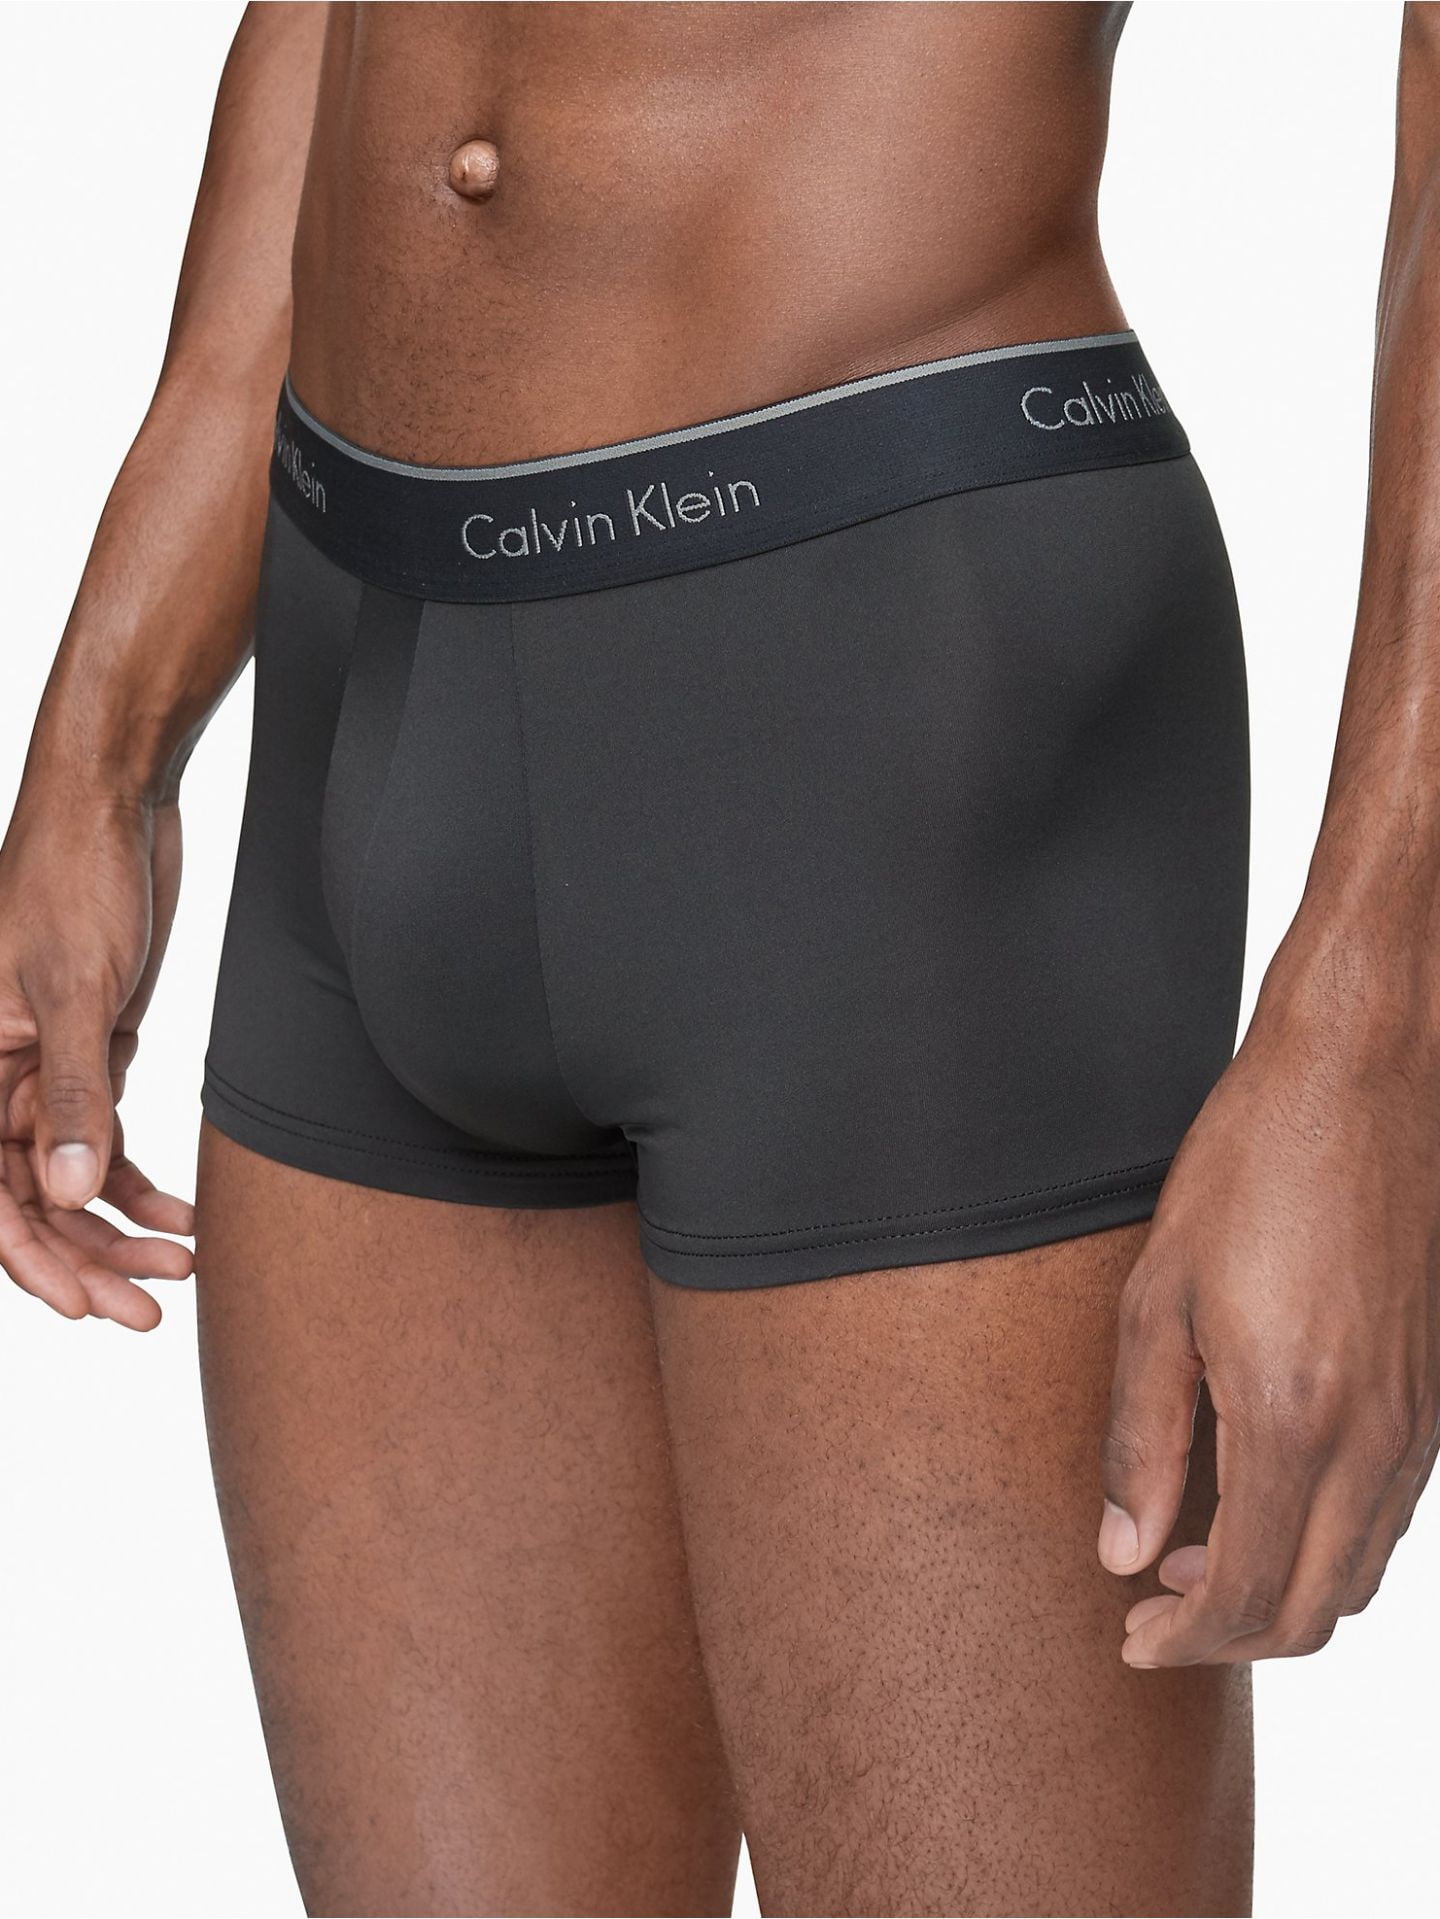 Calvin Klein Men's Micro Stretch Low Rise Trunk - 3 Pack, Black, Small